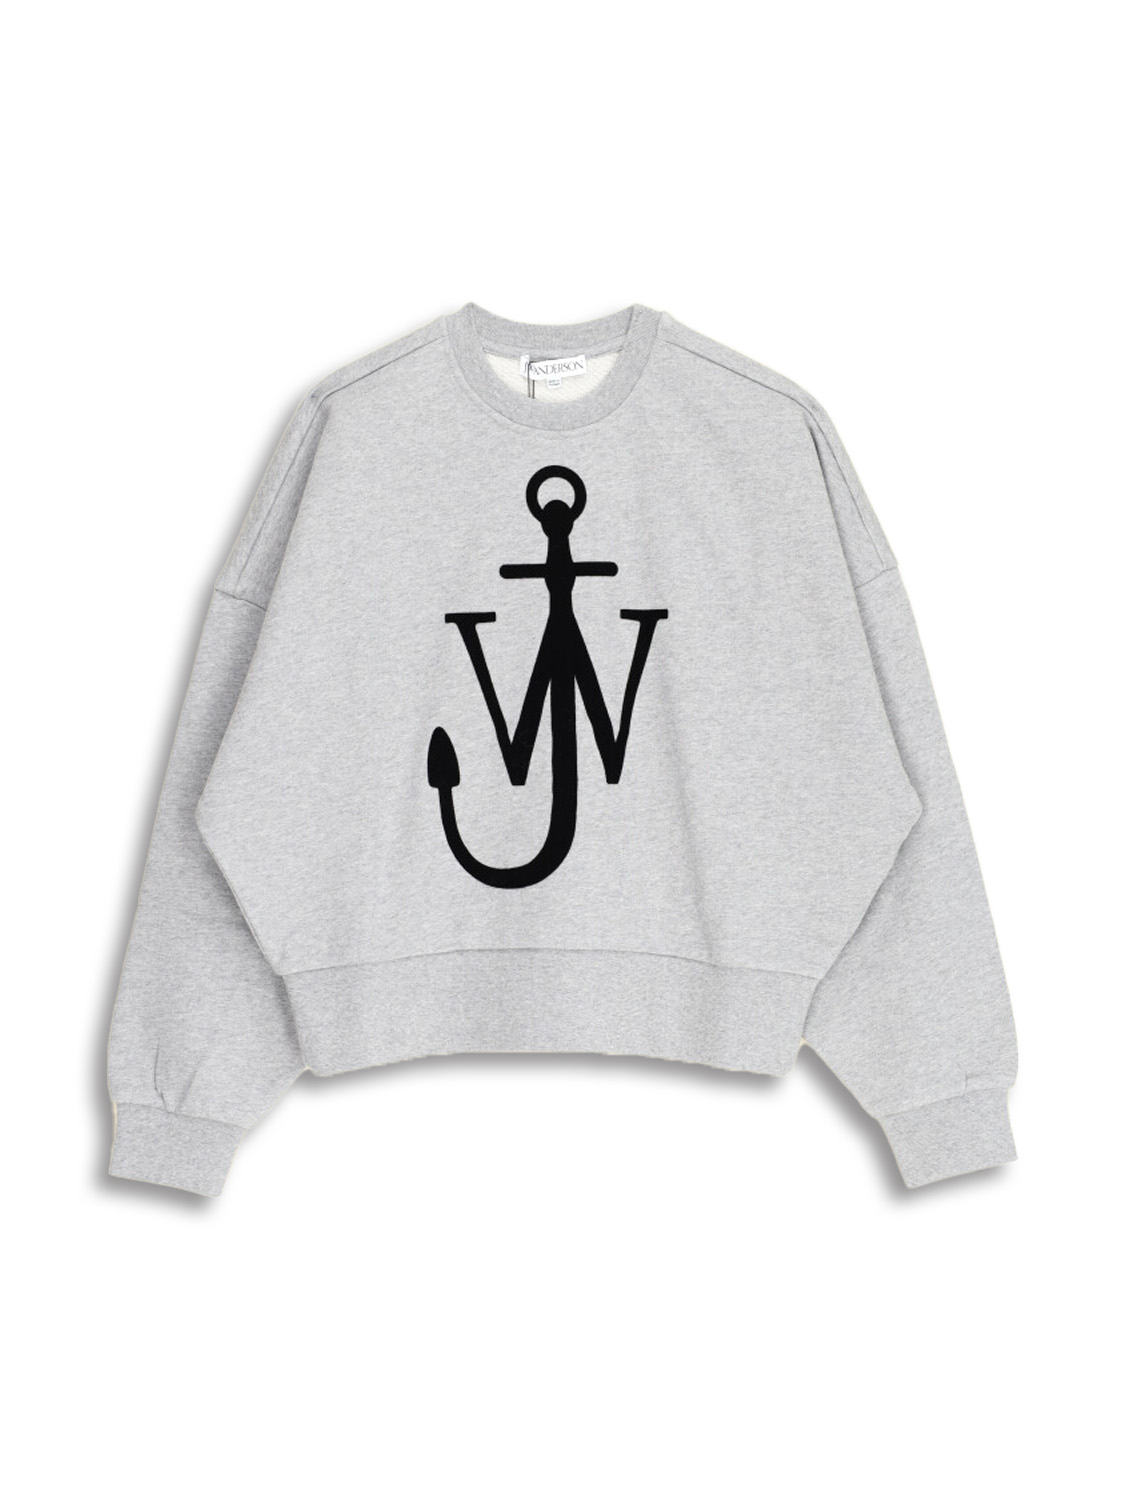 Anchor sweatshirt - sweater with logo design